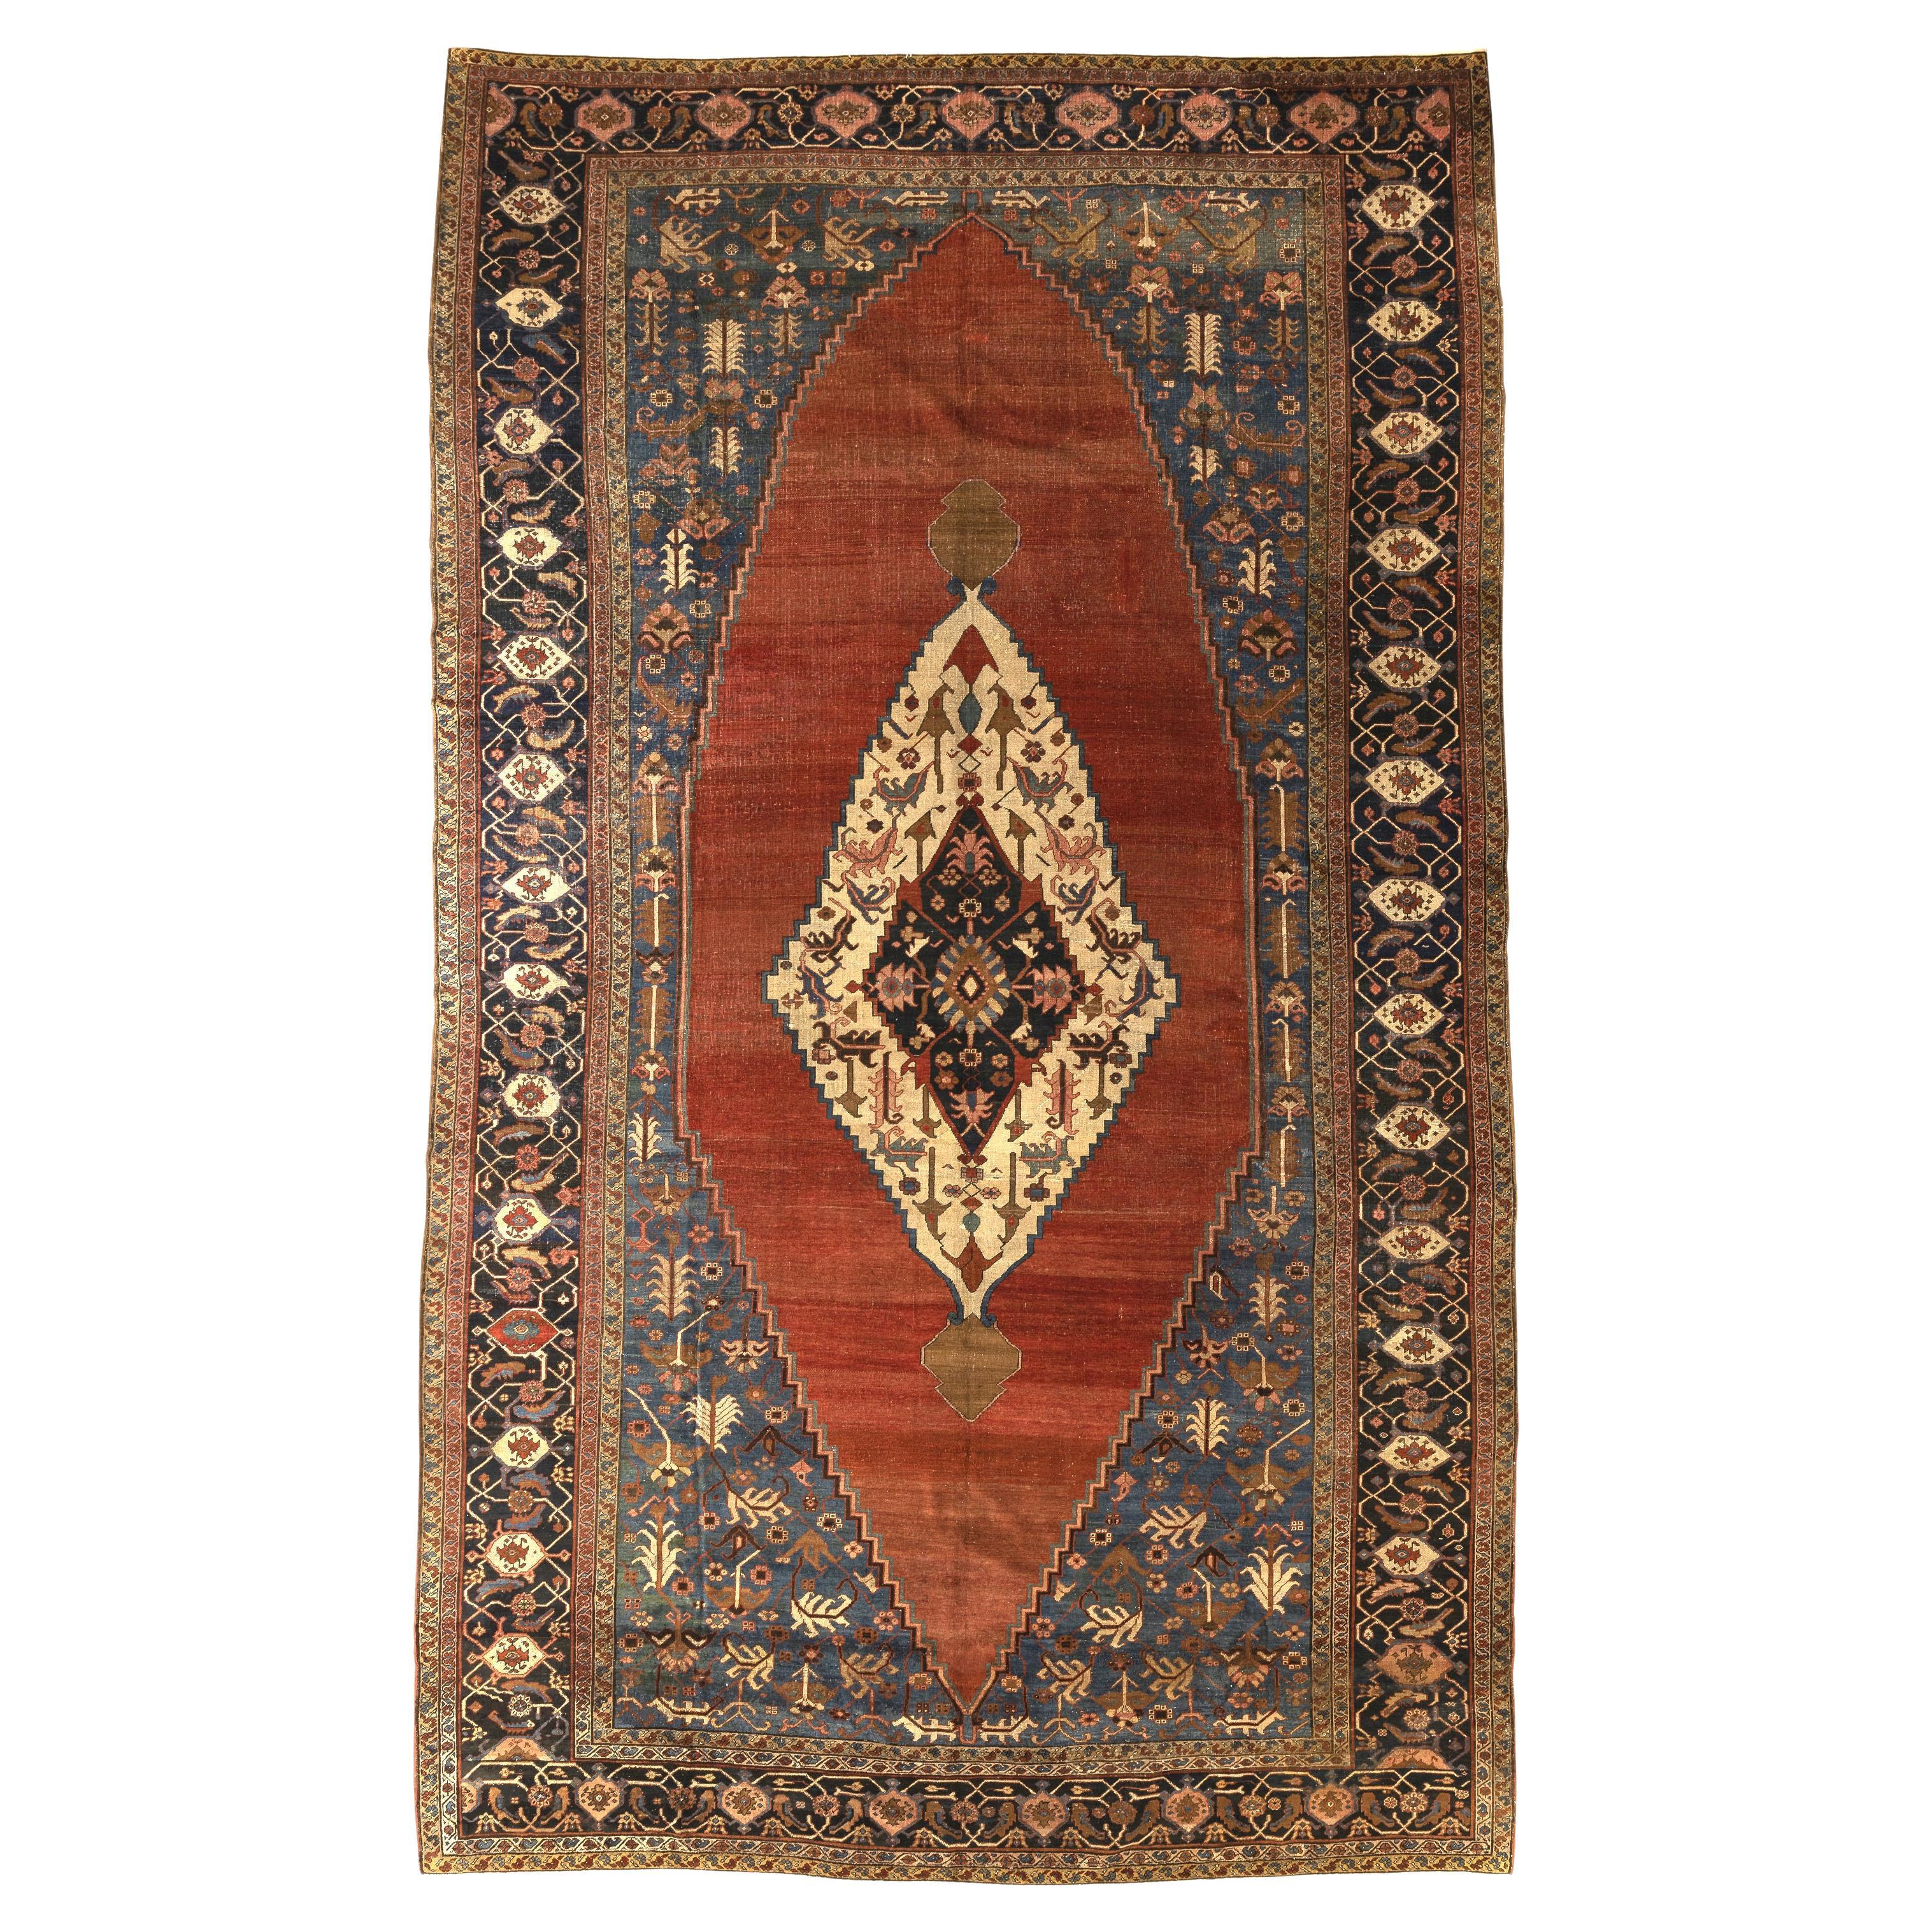 19th Century Antique Persian Serapi Palatial Size Carpet For Sale